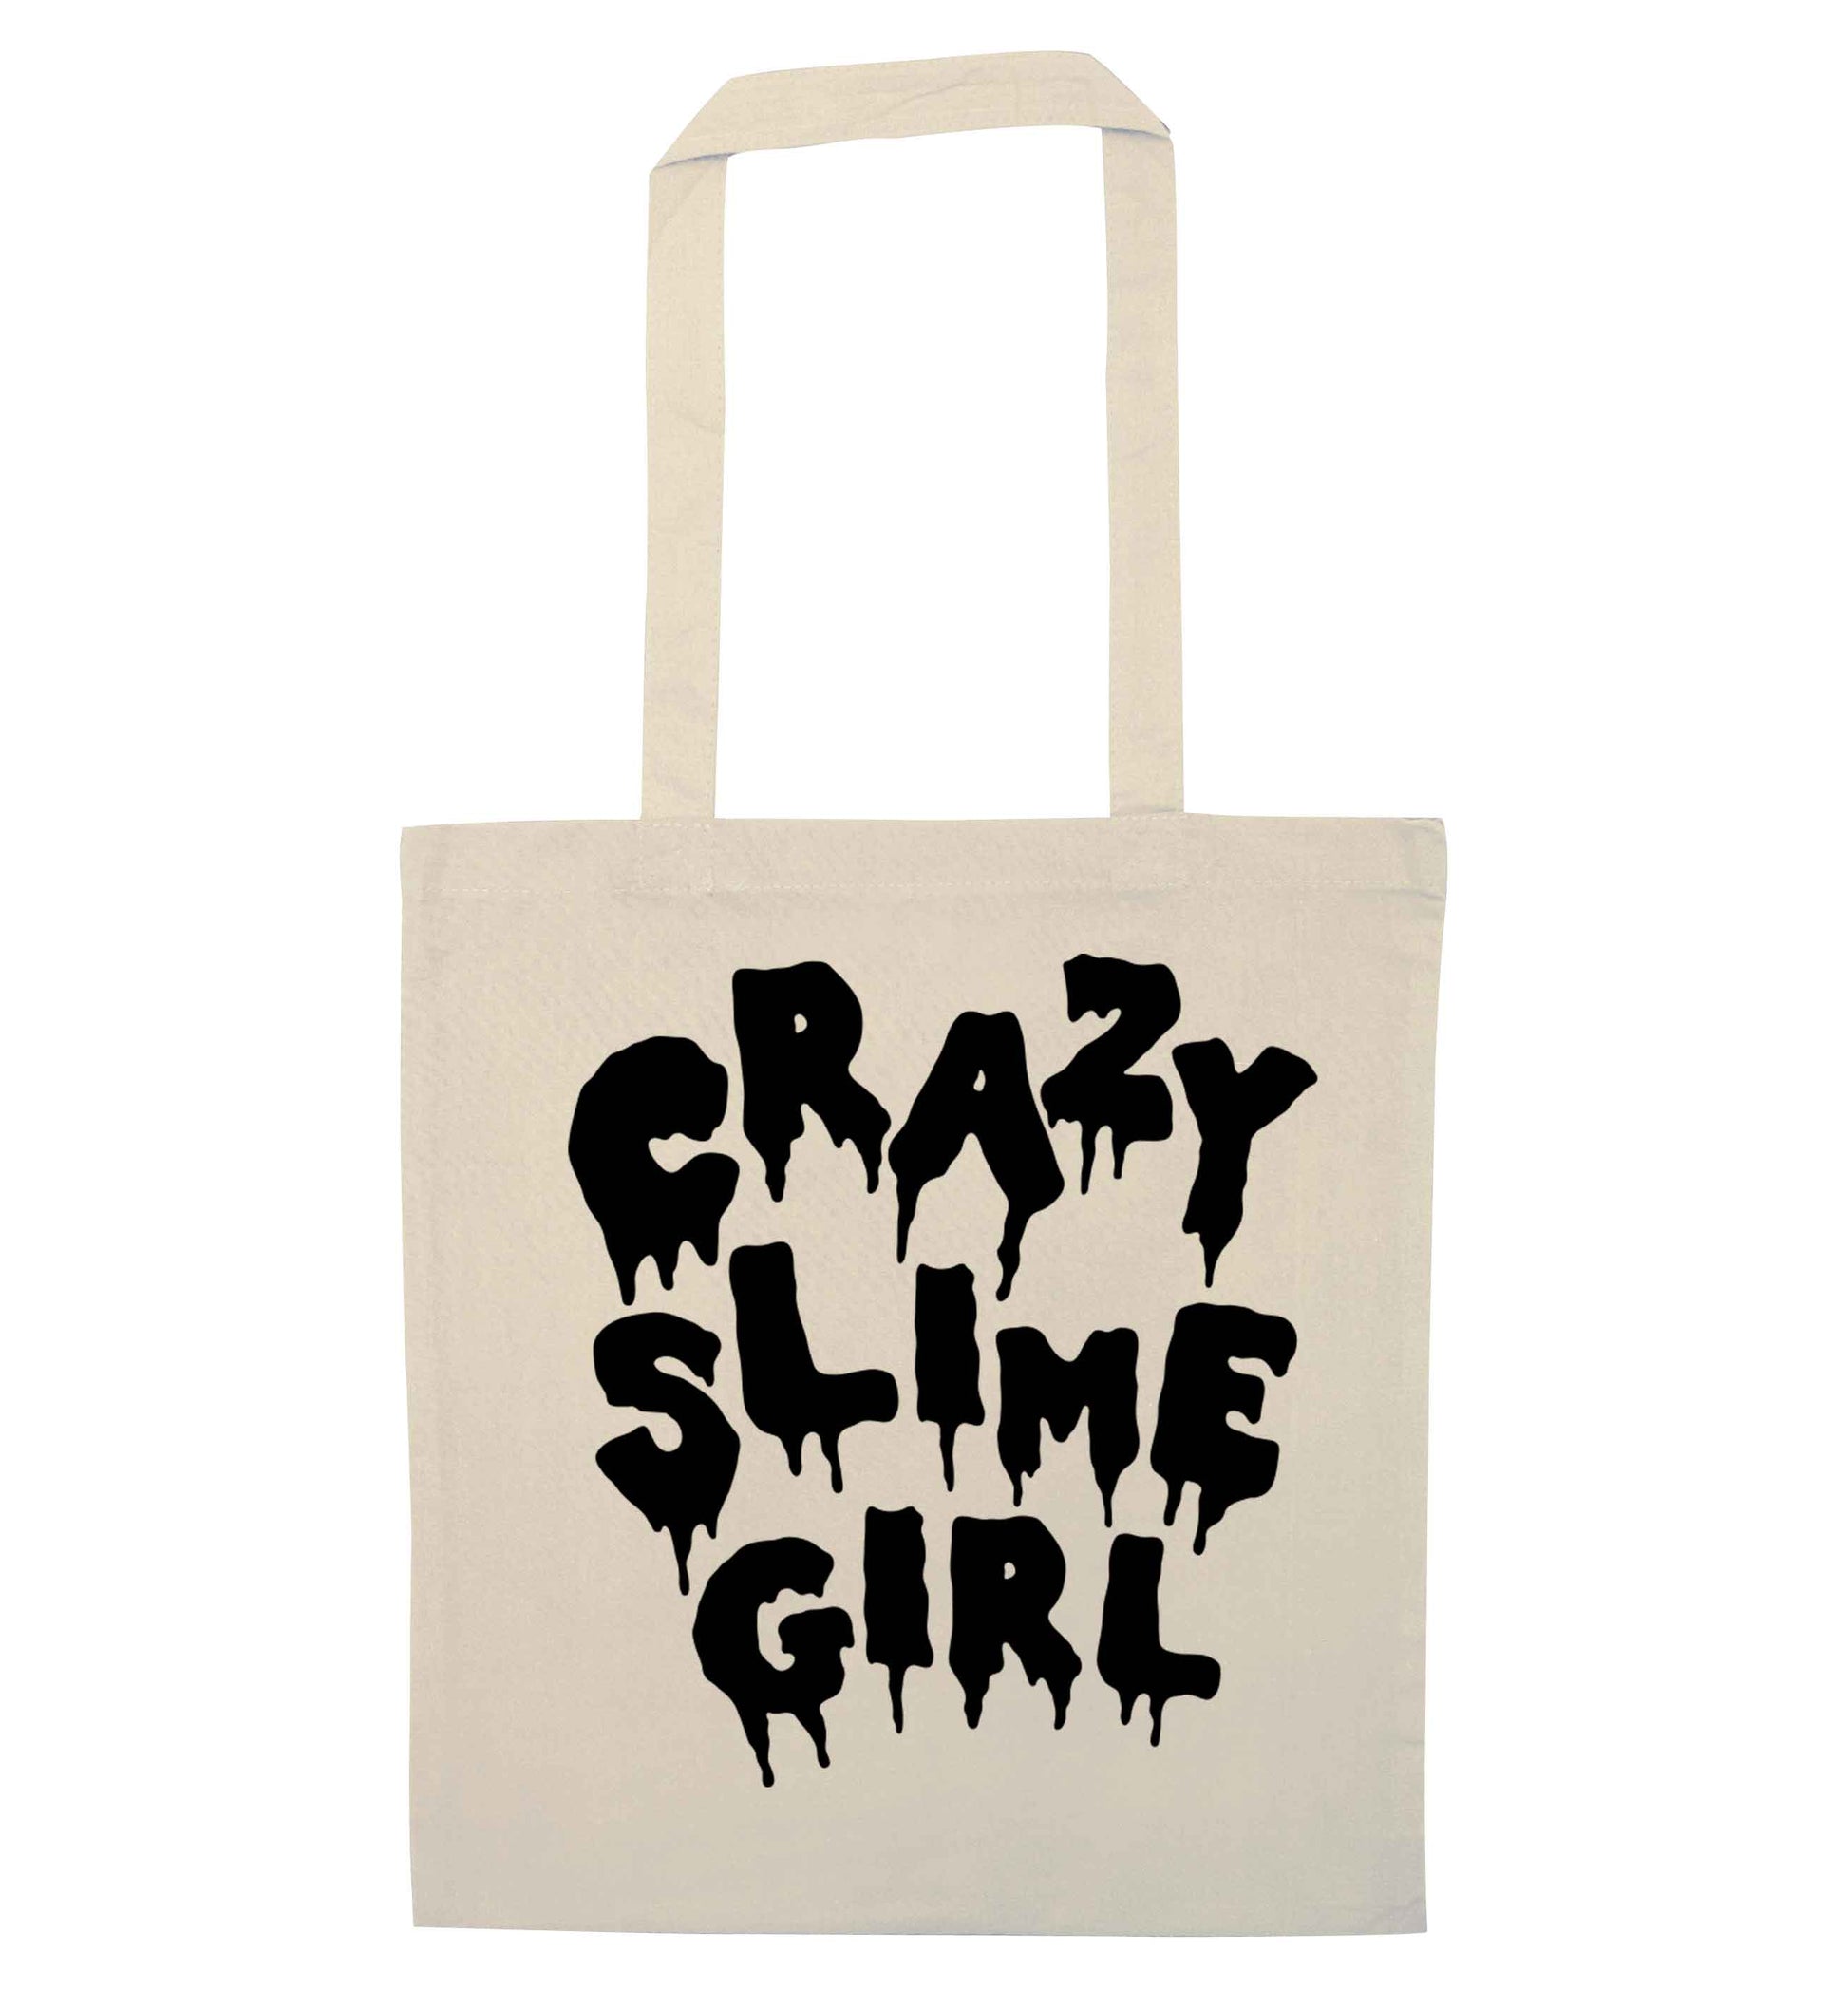 Crazy slime girl natural tote bag